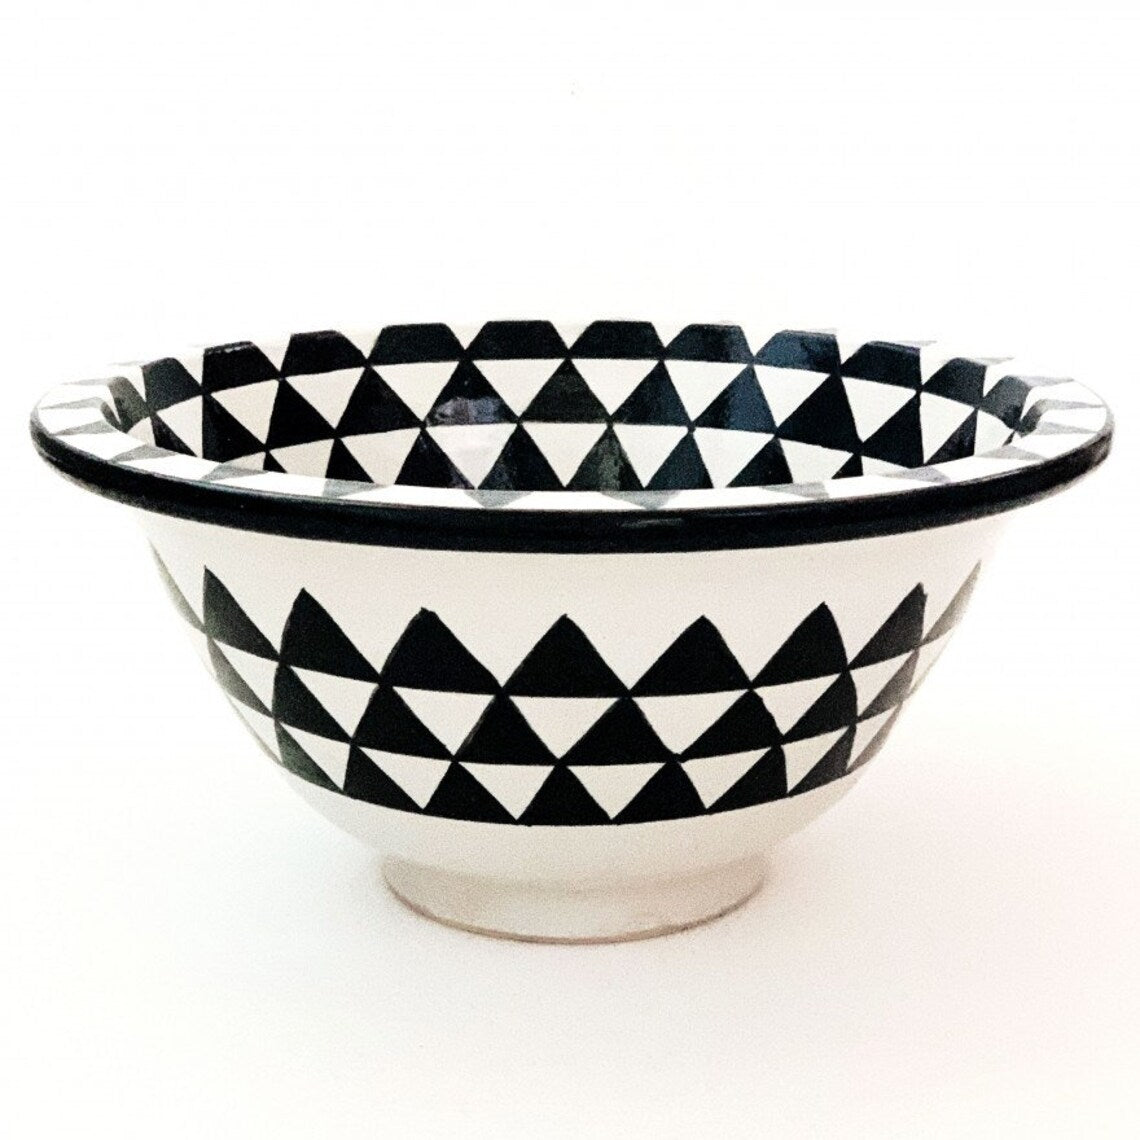 Vasque Marocaine en céramique pour salle de bain - Vasque salle de bain | Lavabo en céramique pour salle de bain | Moroccan sink bowl #37